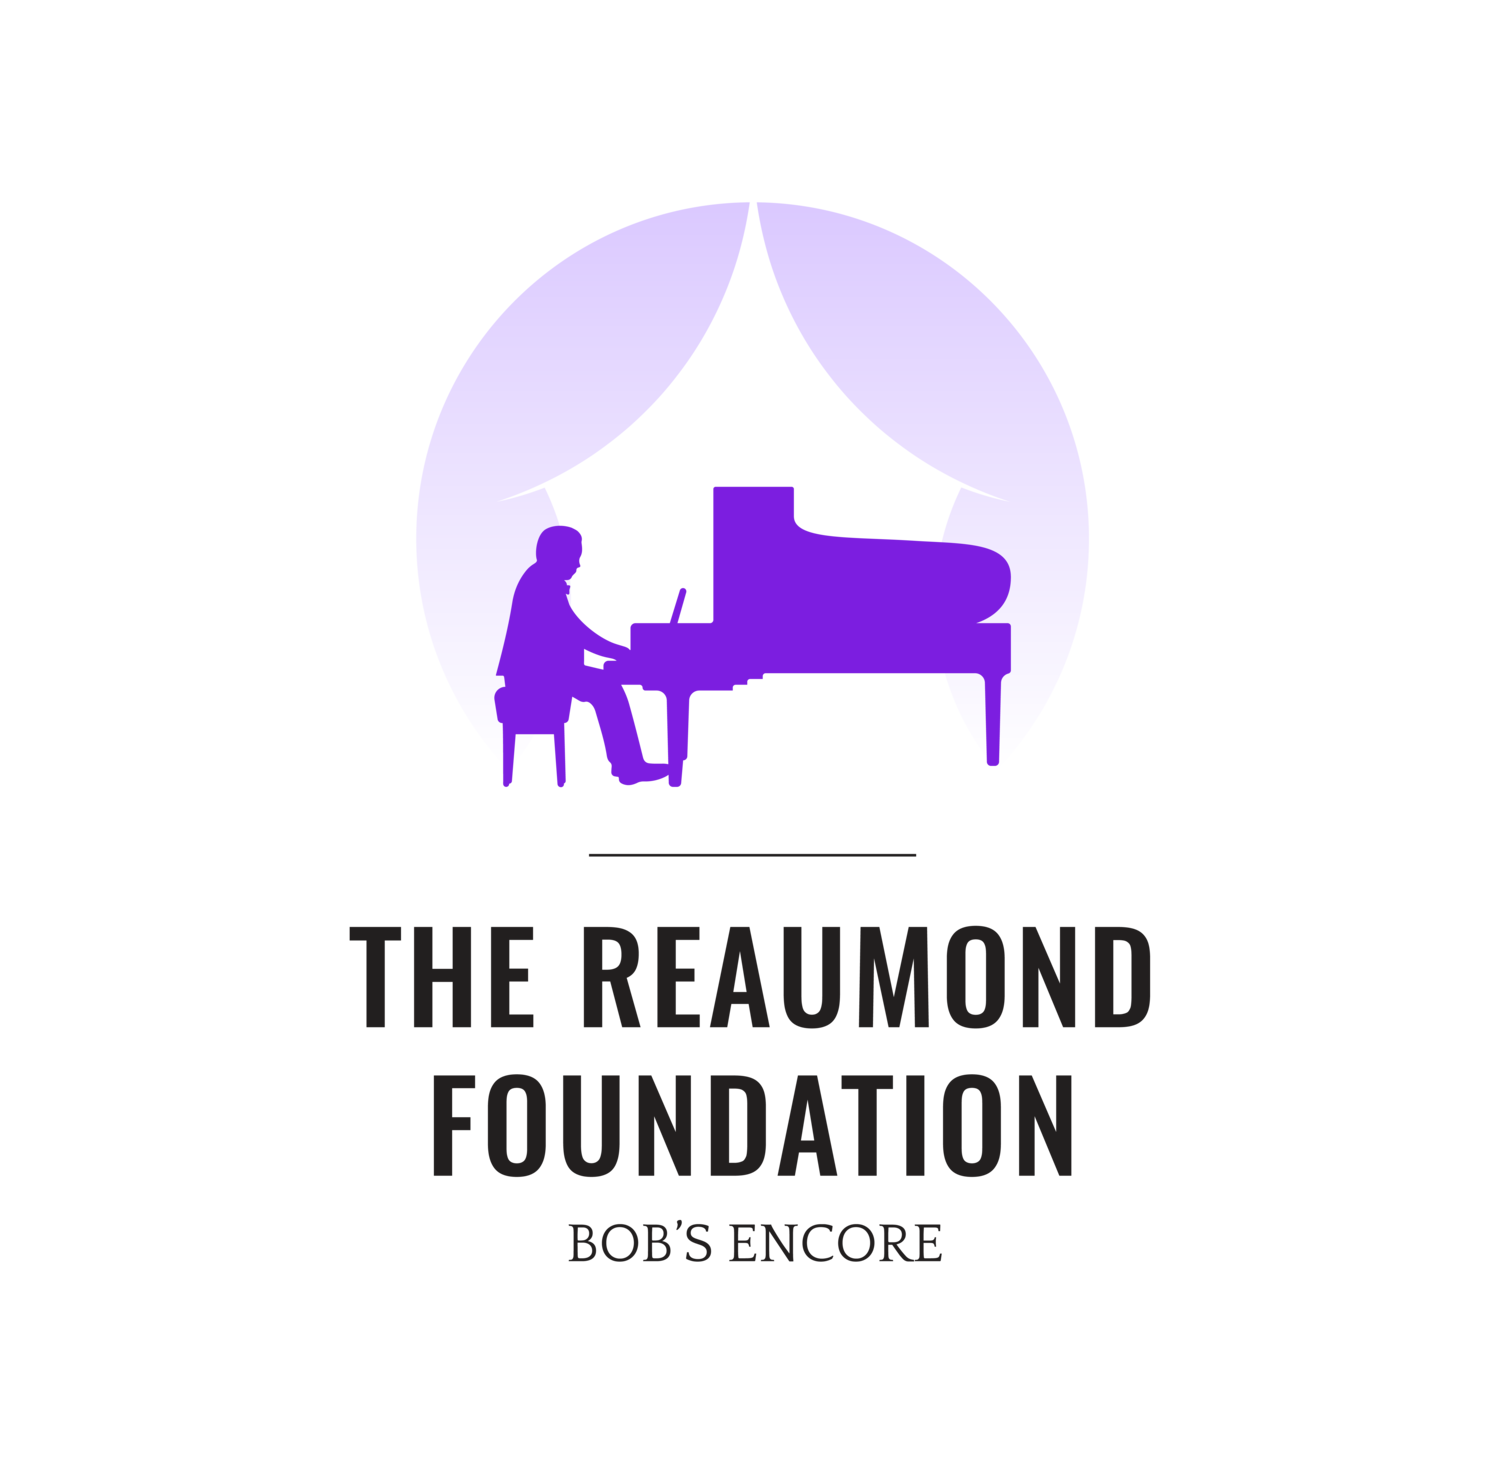 The Reaumond Foundation